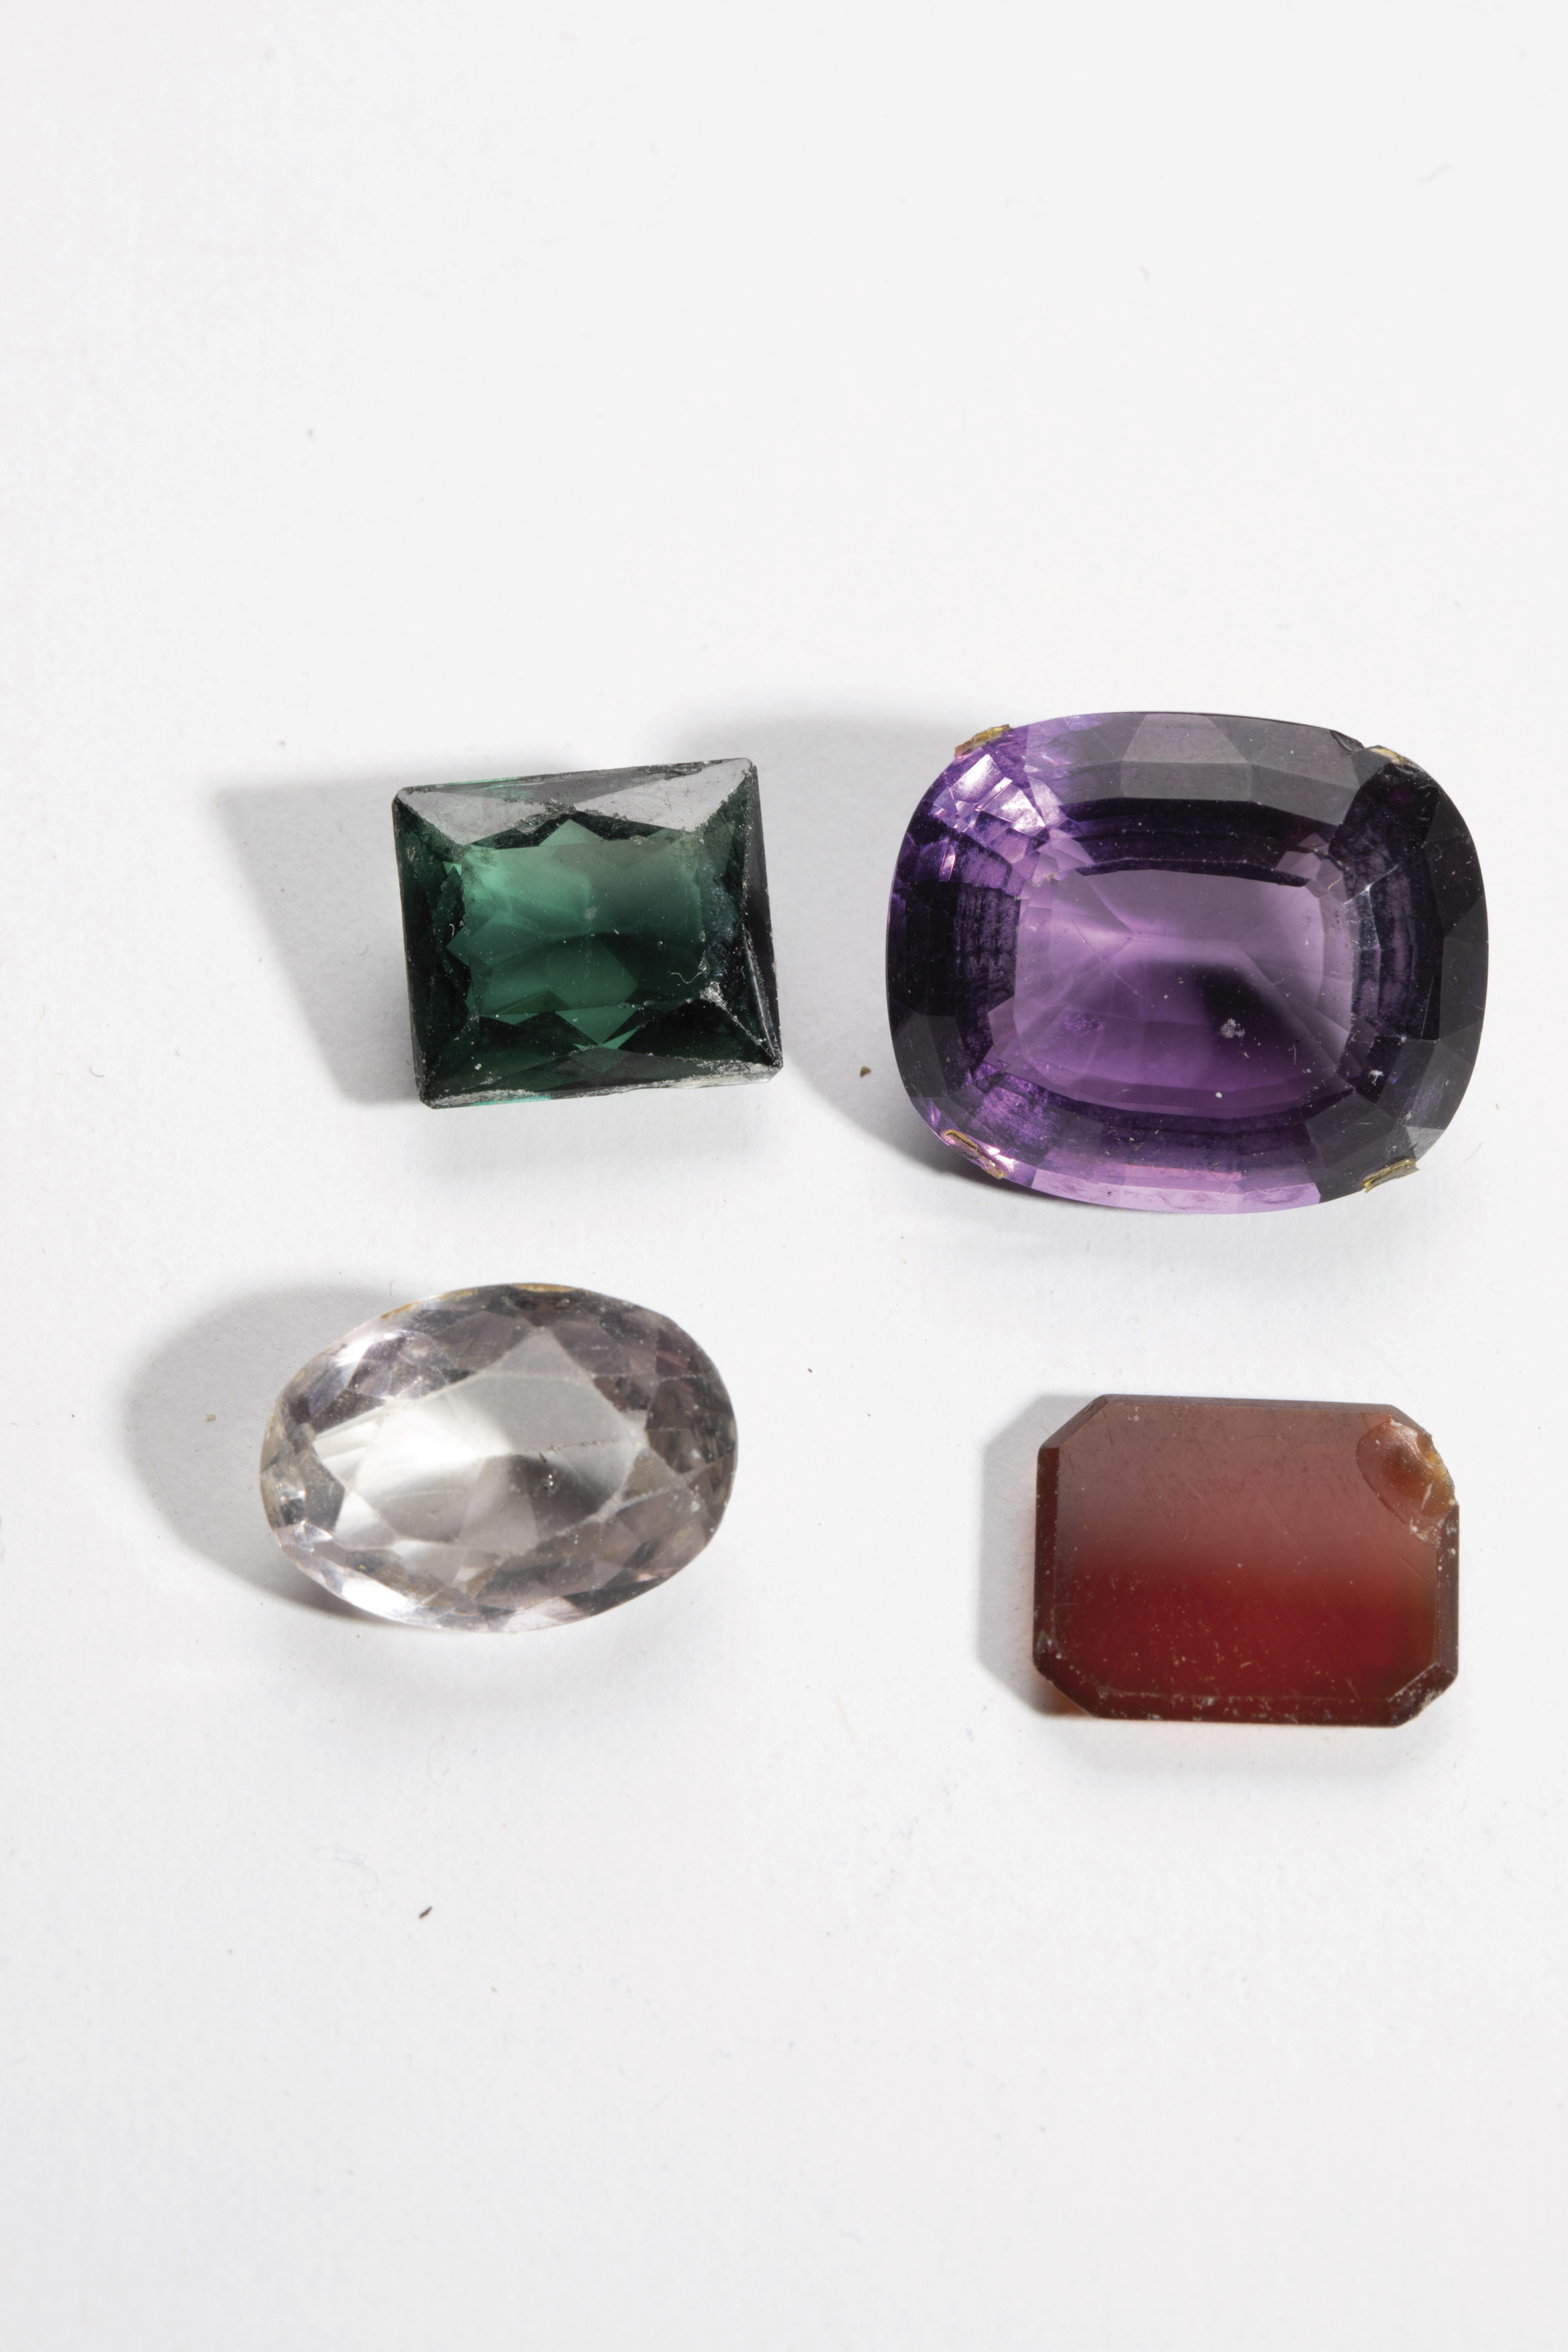 Four unmounted gemstones